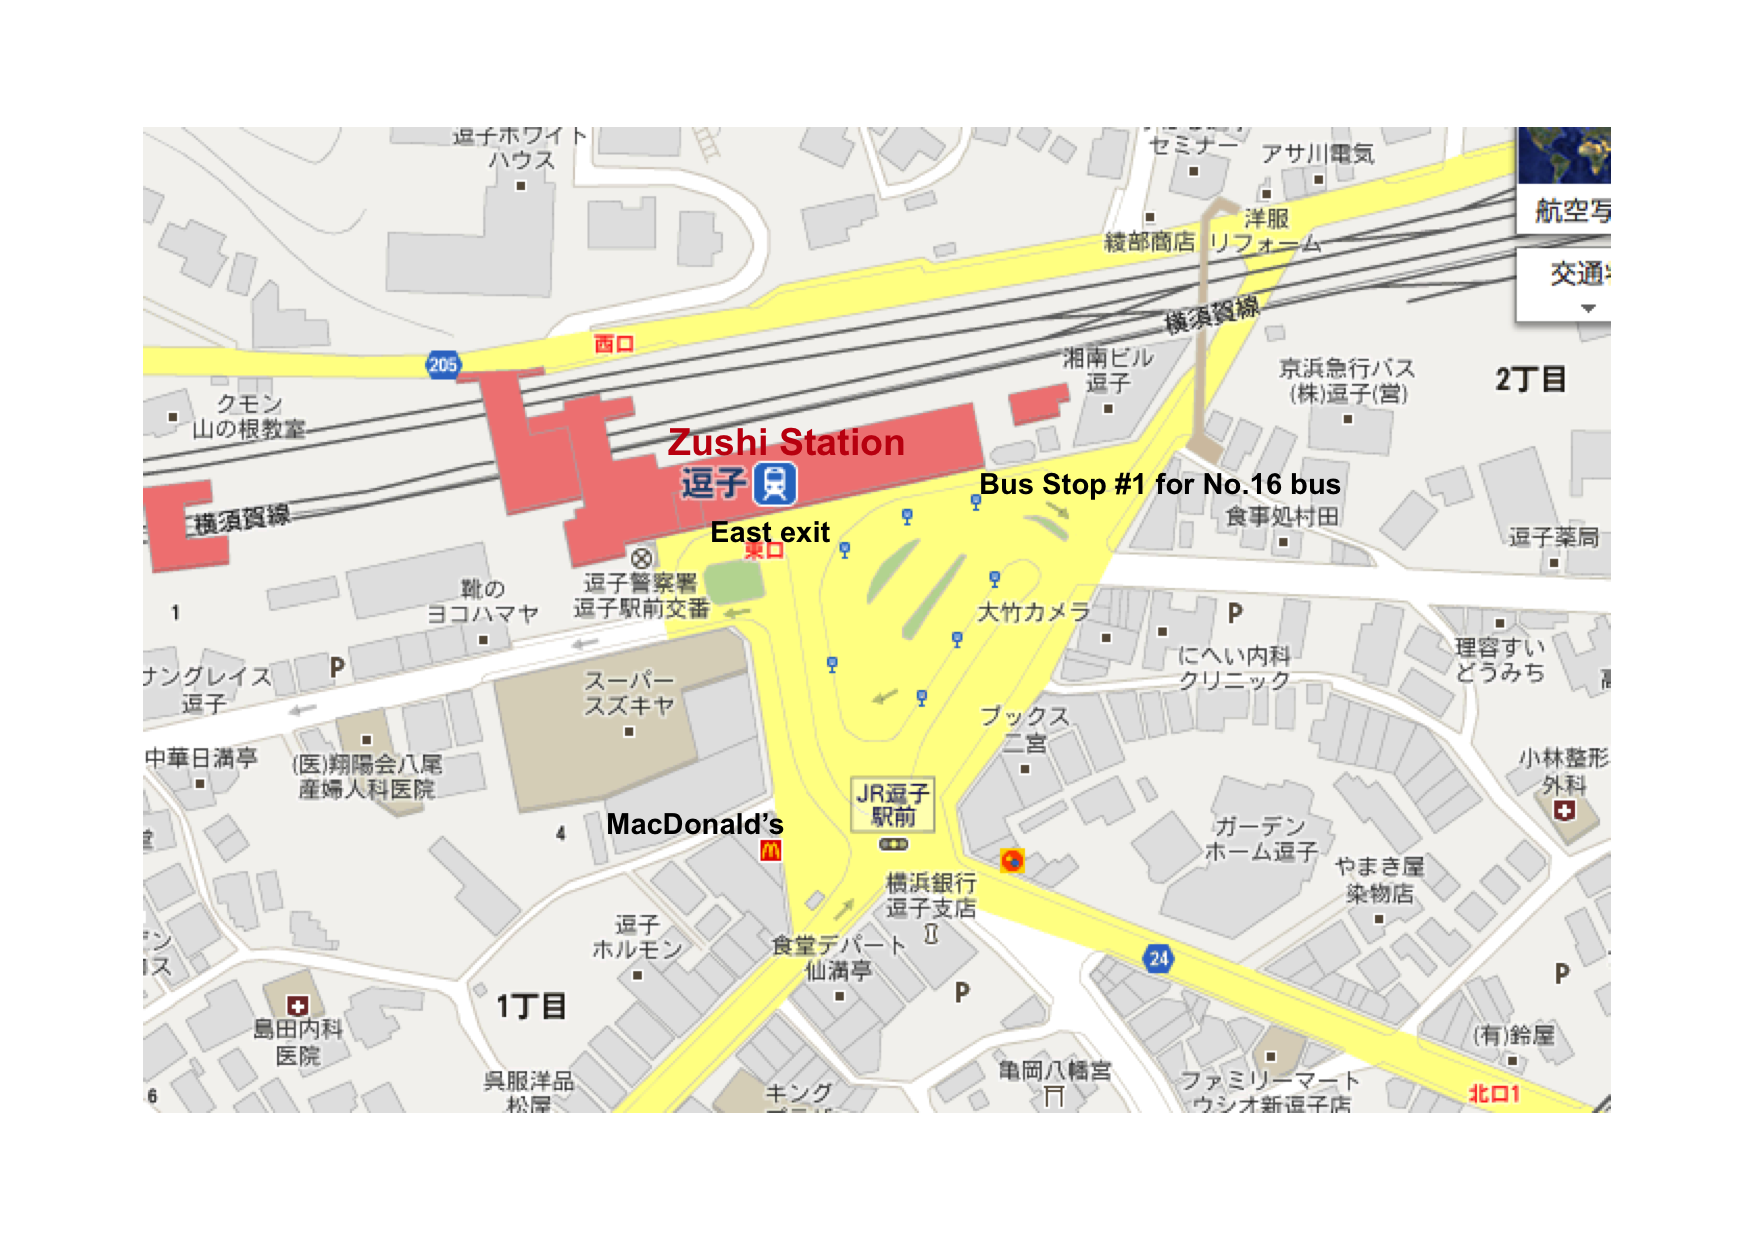 Map around the Zushi Station